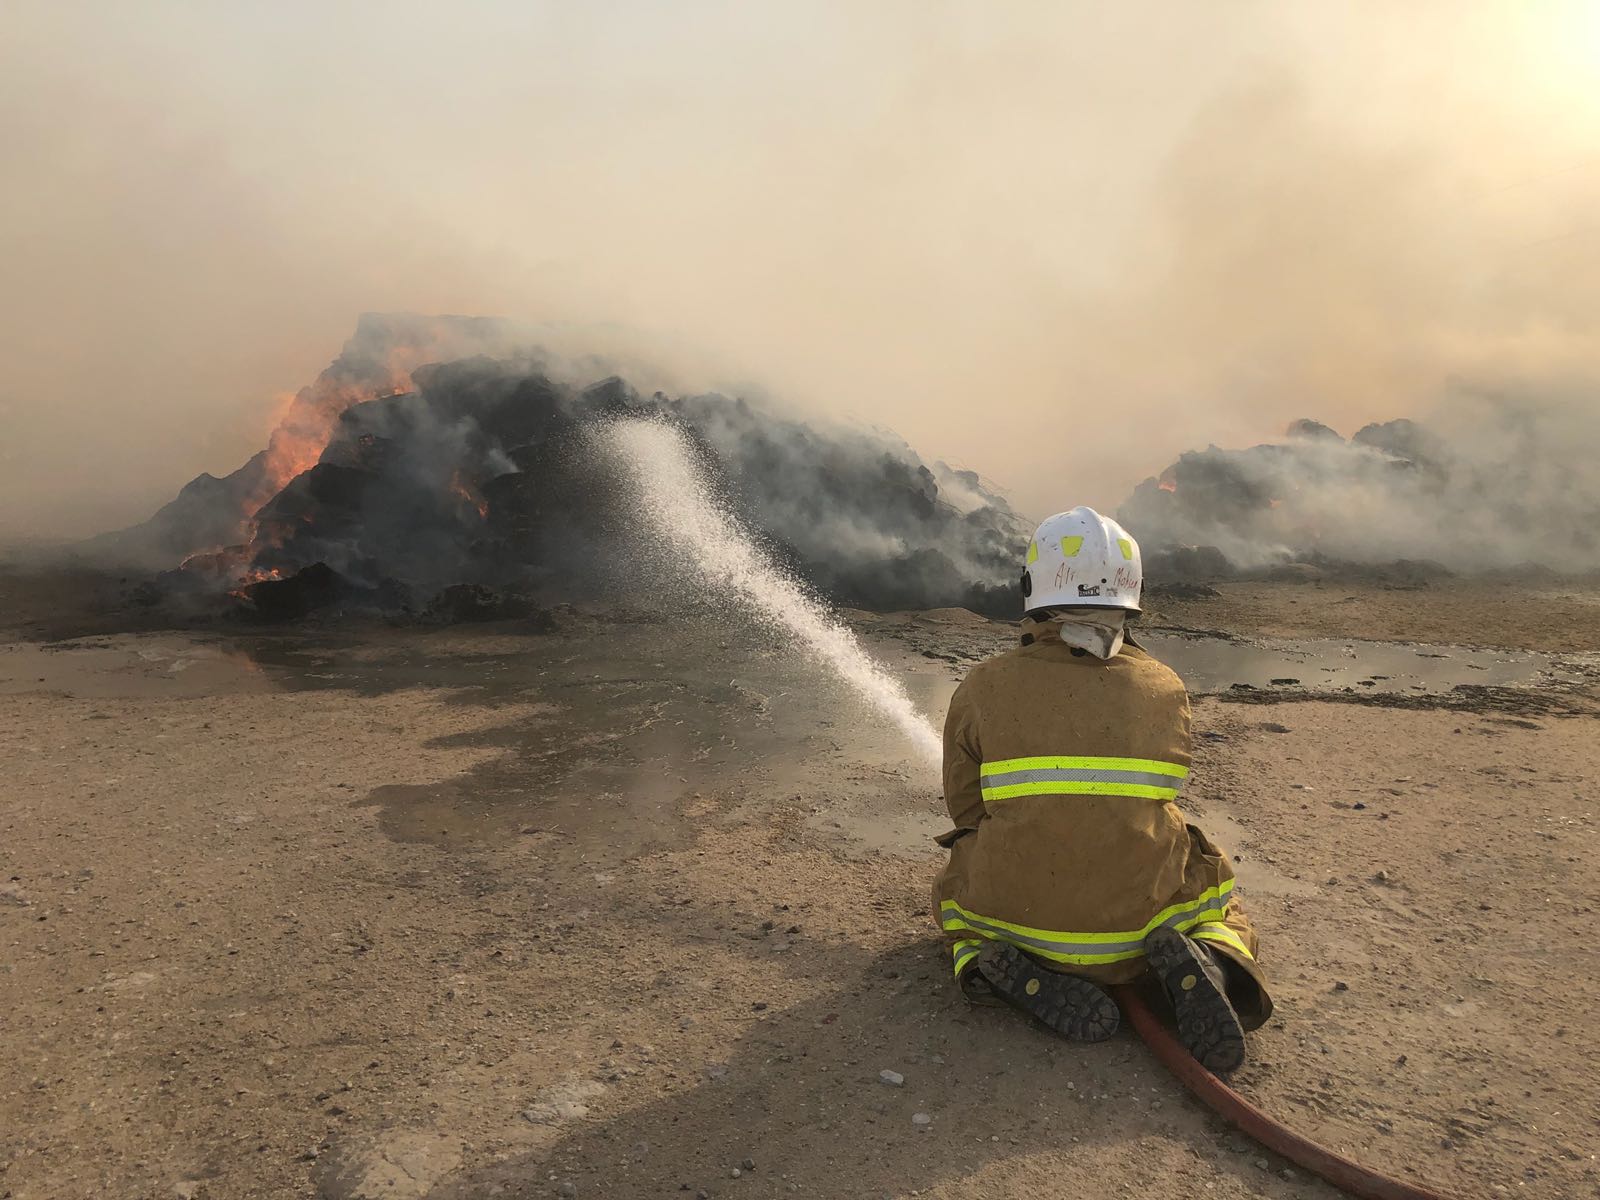 Kuwait Fire Service Directorate (KFSD) teams fighting the fire